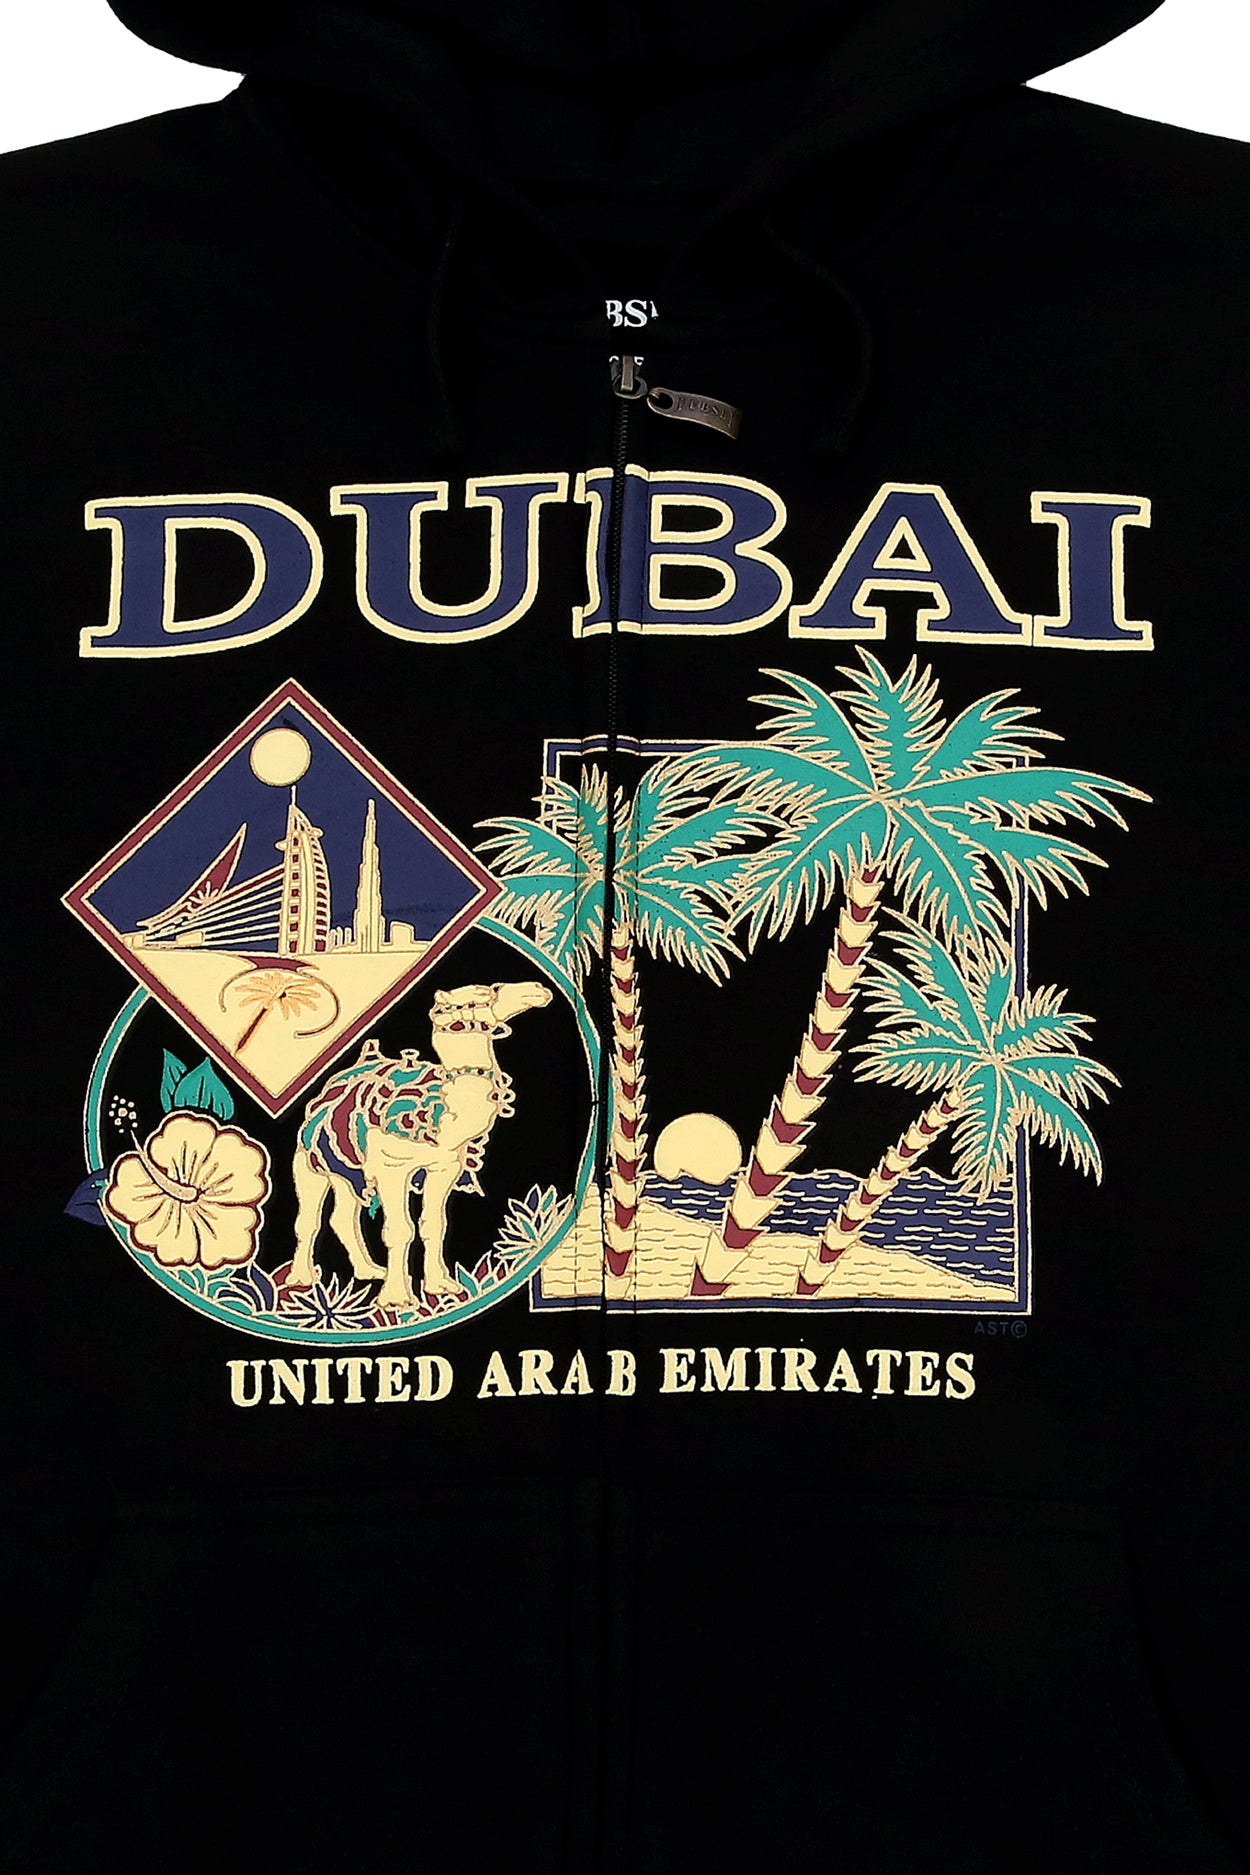 Unisex Dubai Jackets (119)